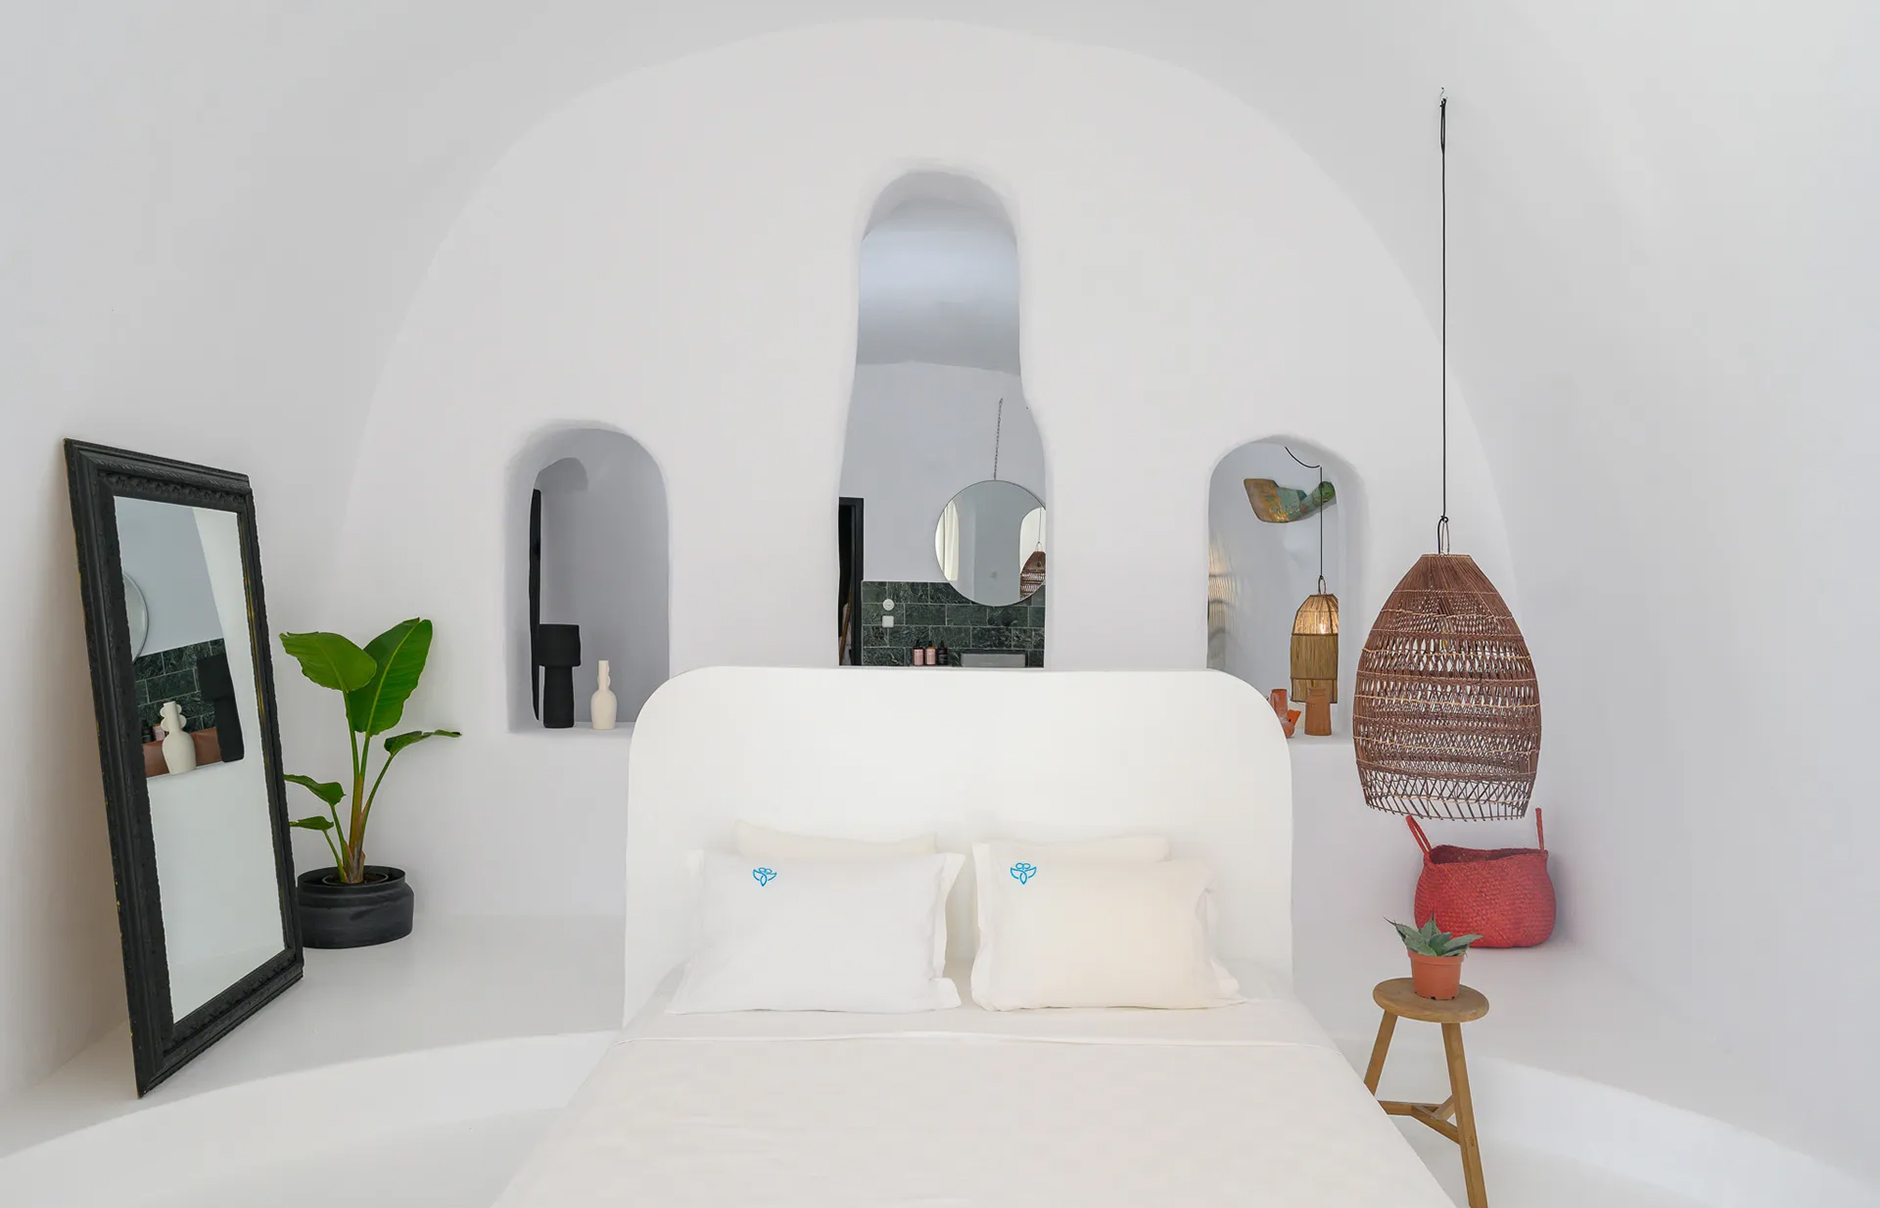 Sophia Luxury Suites, Santorini, Greece • TravelPlusStyle.com